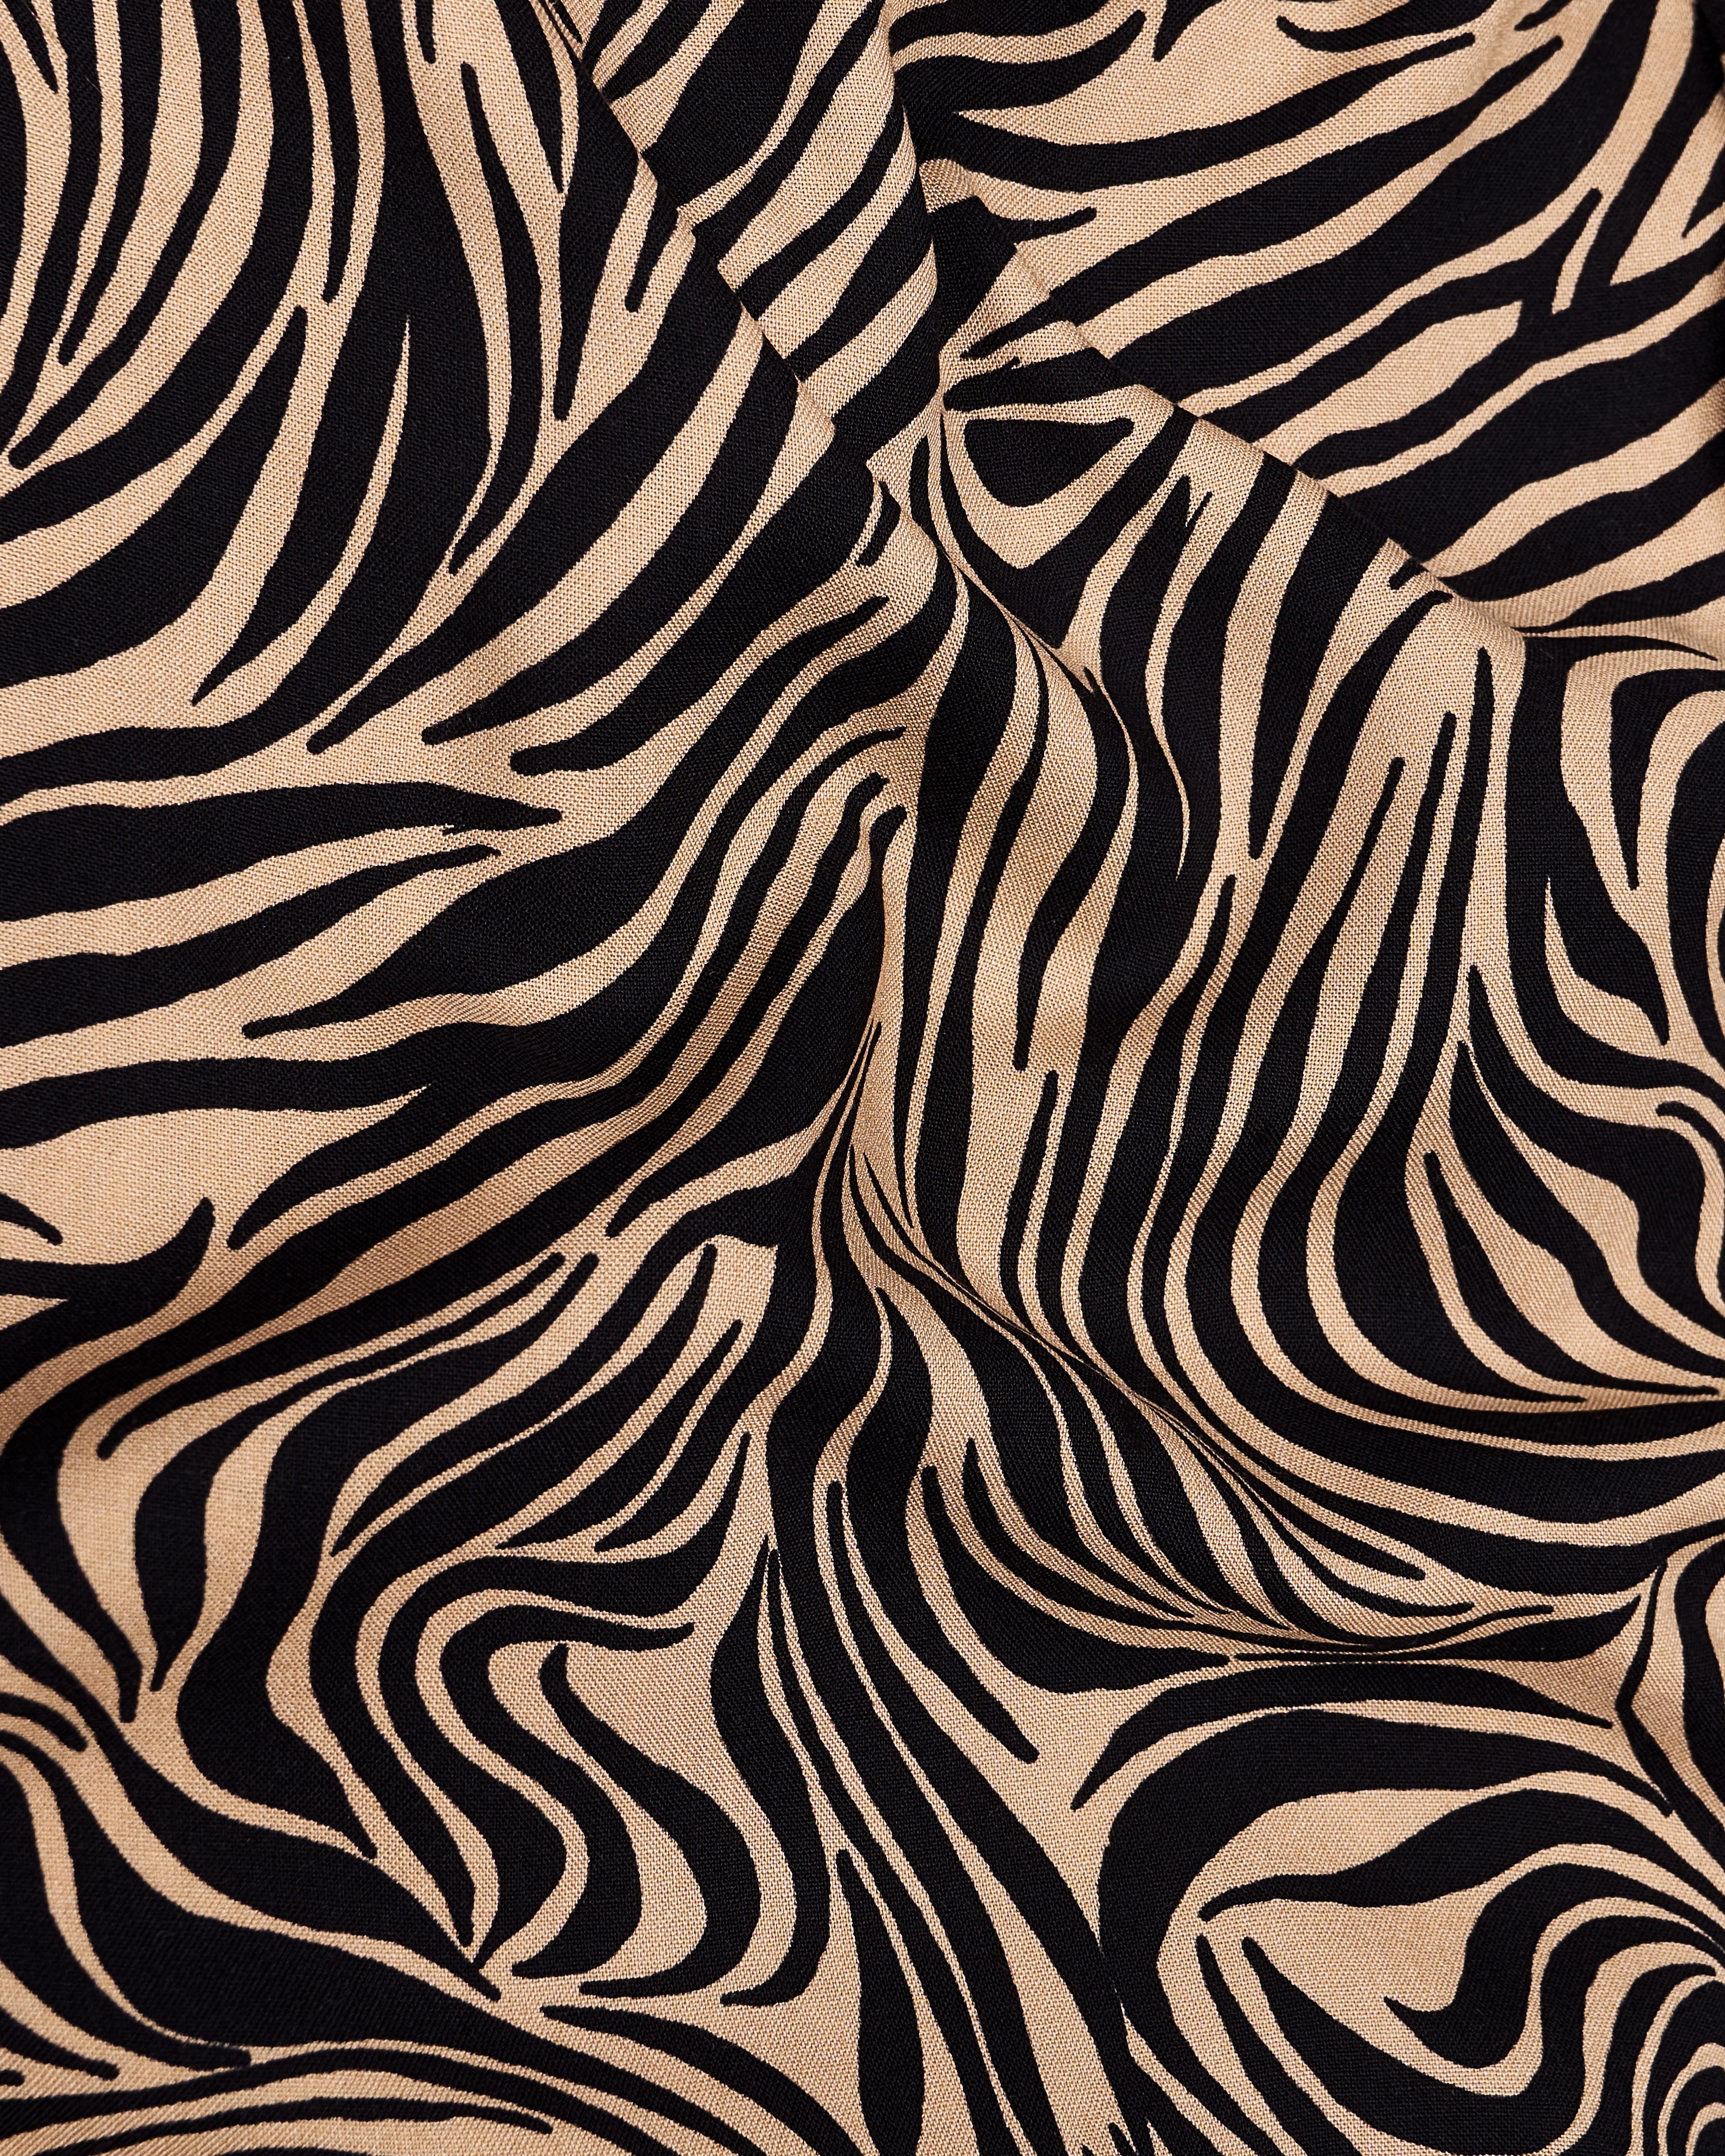 Mandys Brown with Black Zebra Stripes Printed Premium Tencel Shirt 9260-38,9260-H-38,9260-39,9260-H-39,9260-40,9260-H-40,9260-42,9260-H-42,9260-44,9260-H-44,9260-46,9260-H-46,9260-48,9260-H-48,9260-50,9260-H-50,9260-52,9260-H-52